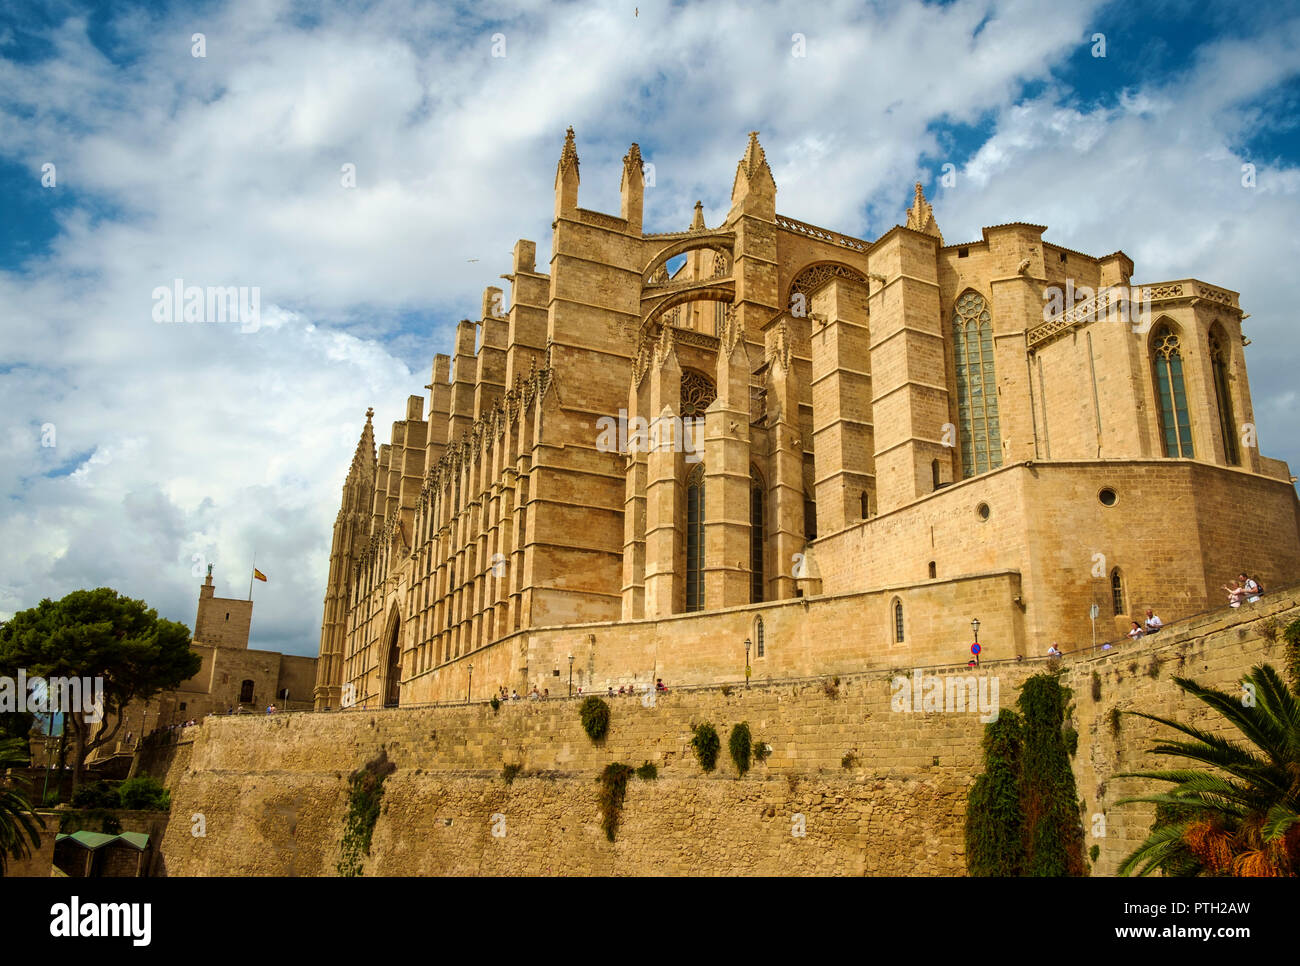 The Cathedral of Santa Maria of Palma, Mallorca, Spain Stock Photo